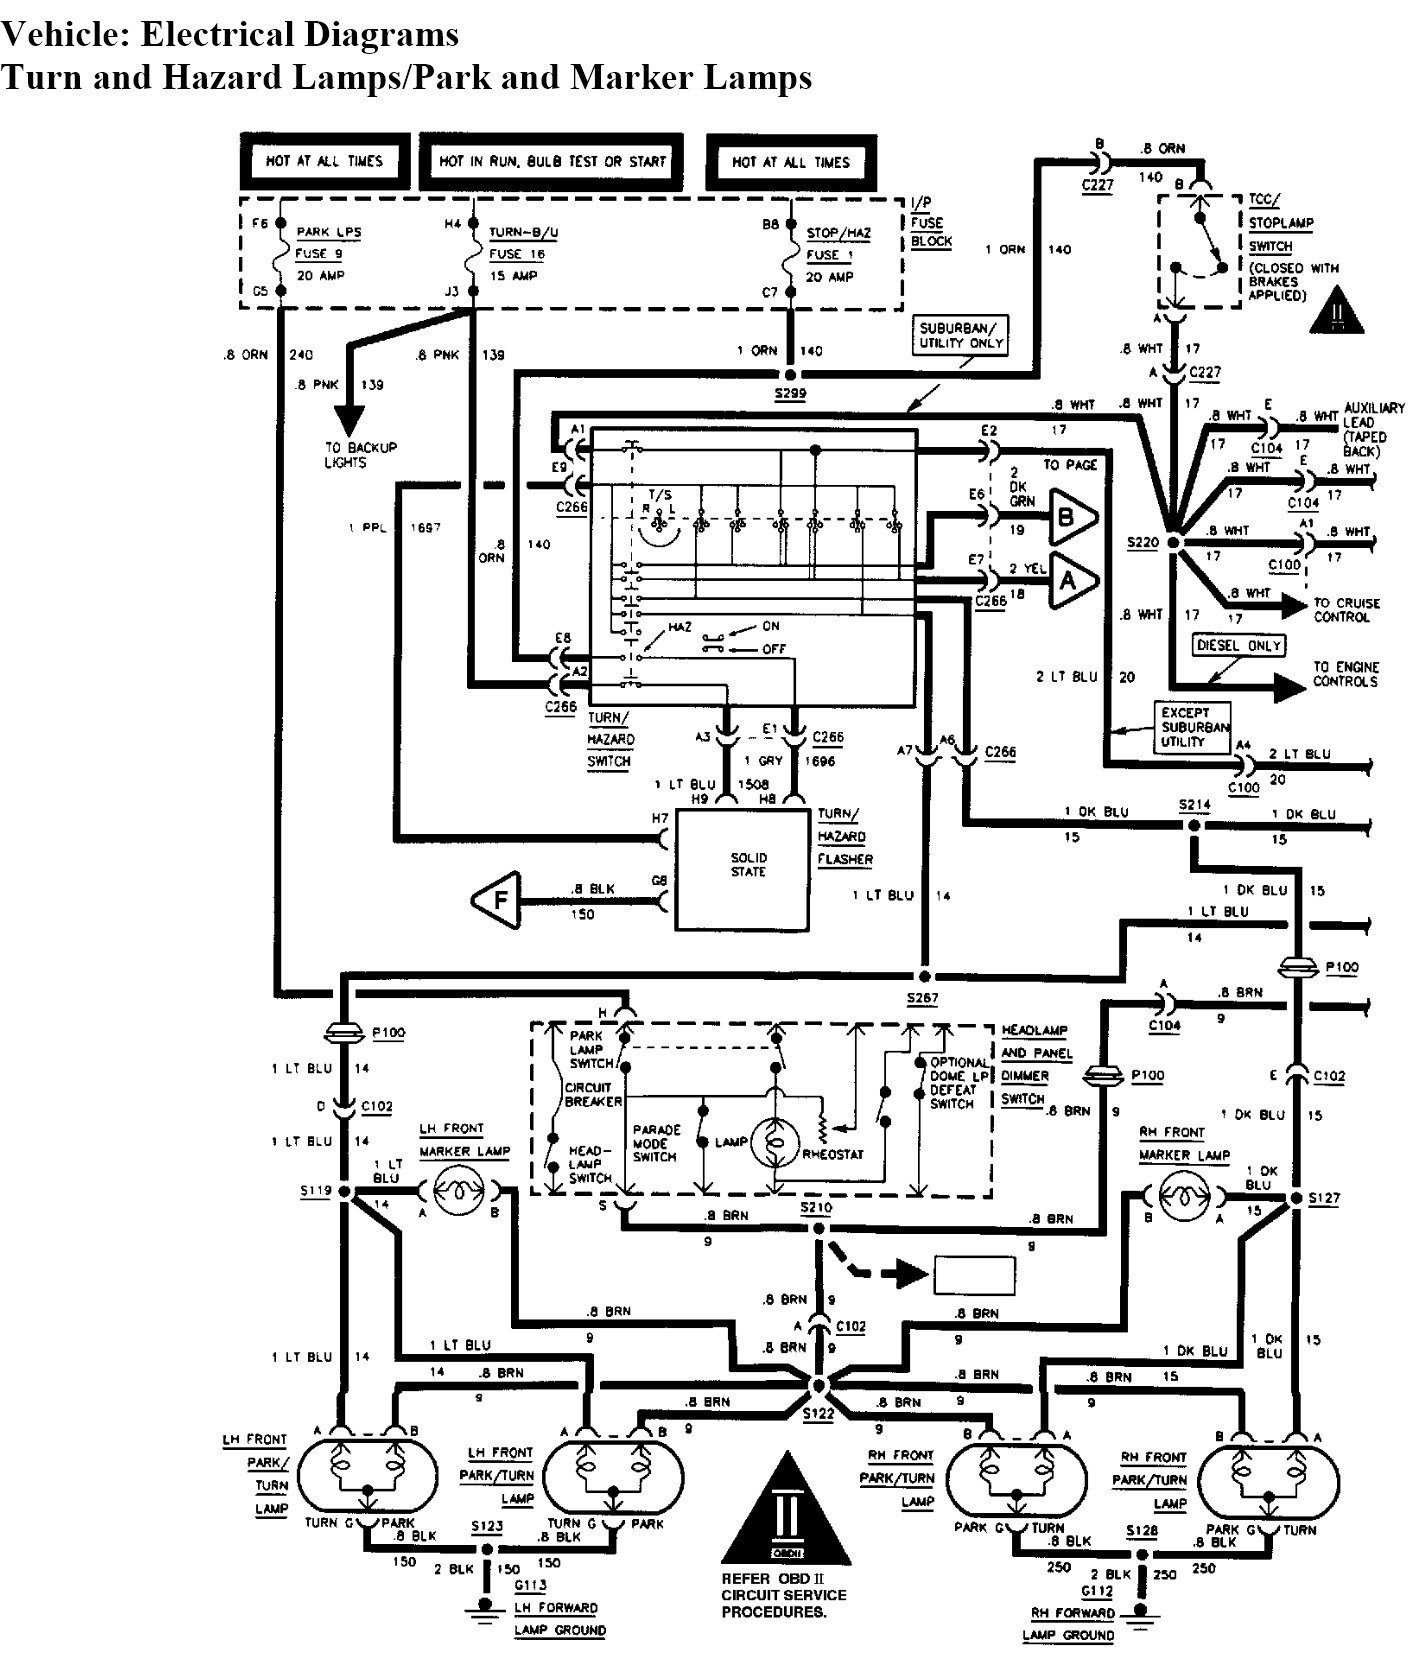 Wfco 8955 Converter Wiring Diagram from mainetreasurechest.com